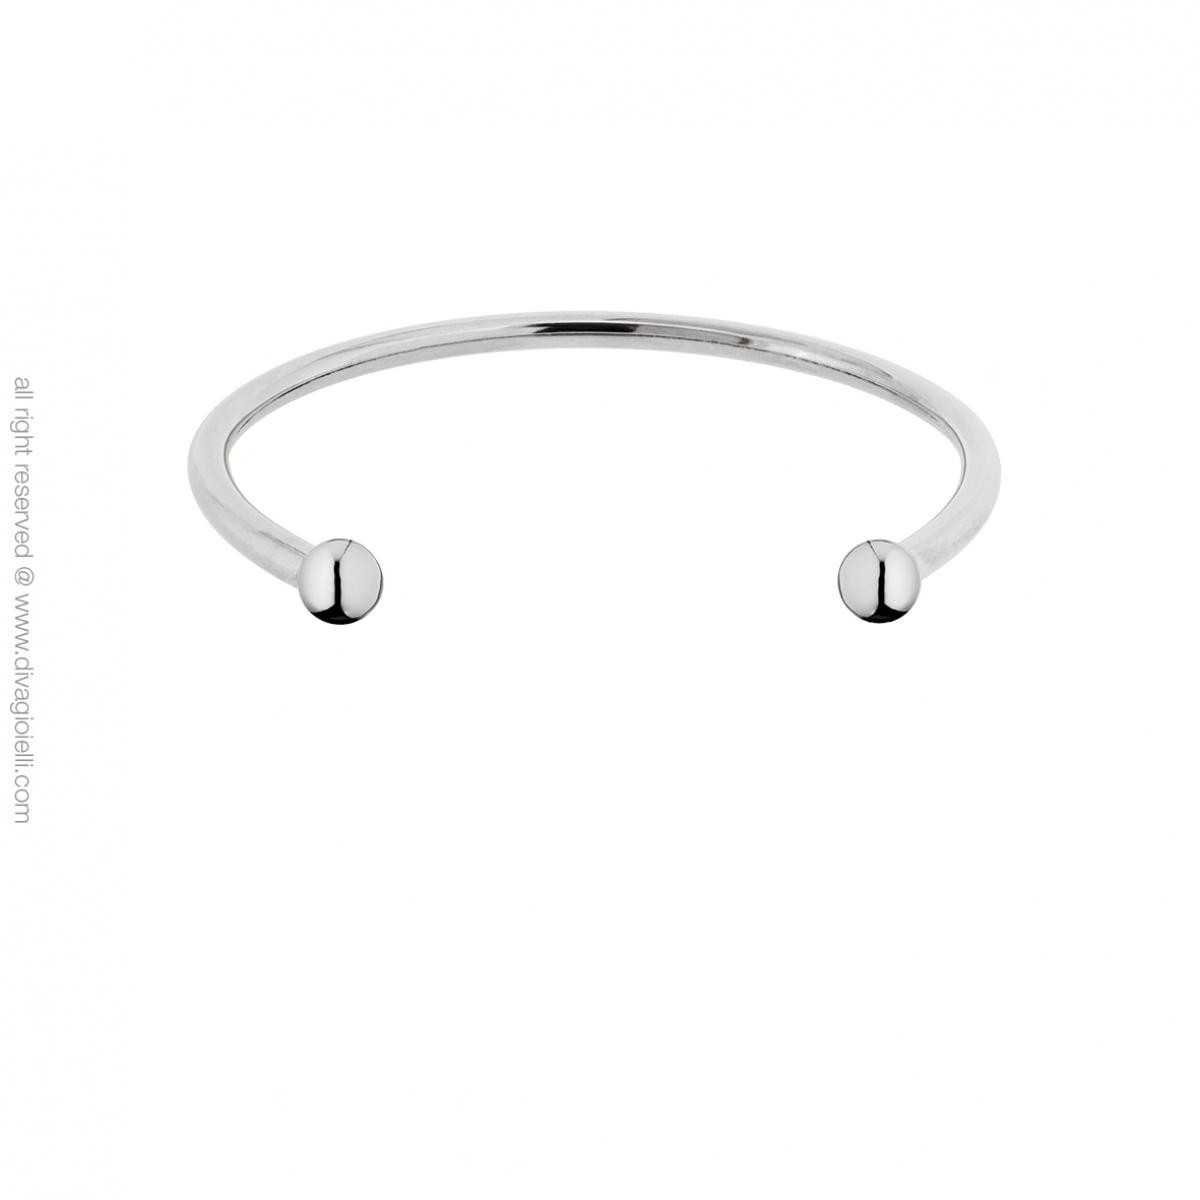 Bracelet Diva Gioielli 17759-005 - Eclisse